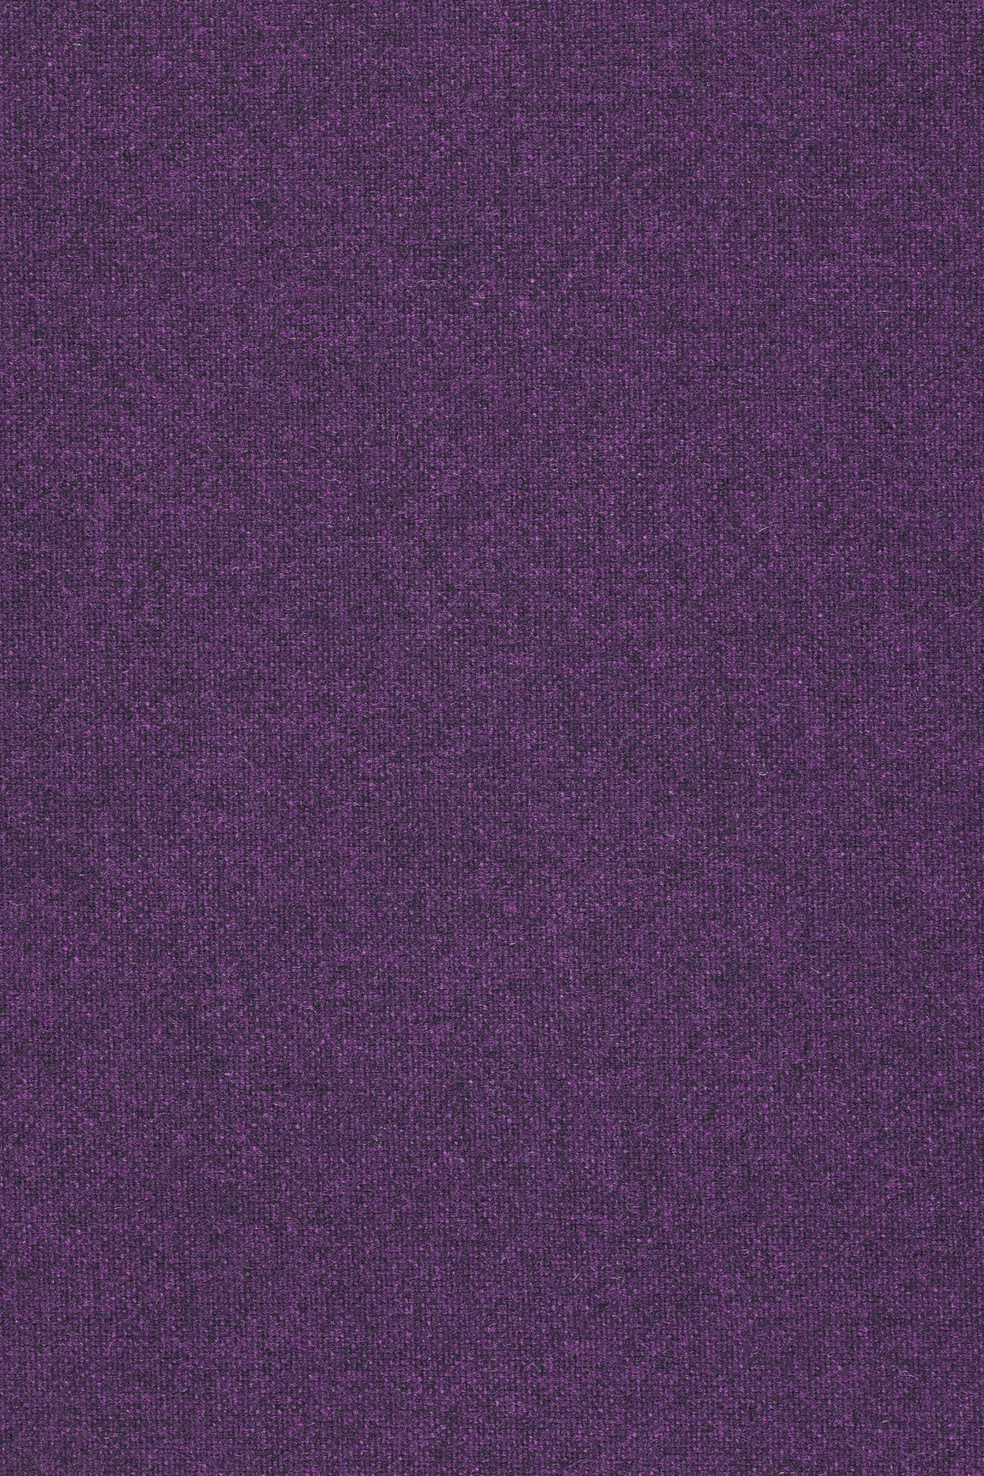 Fabric sample Tonica 2 672 purple